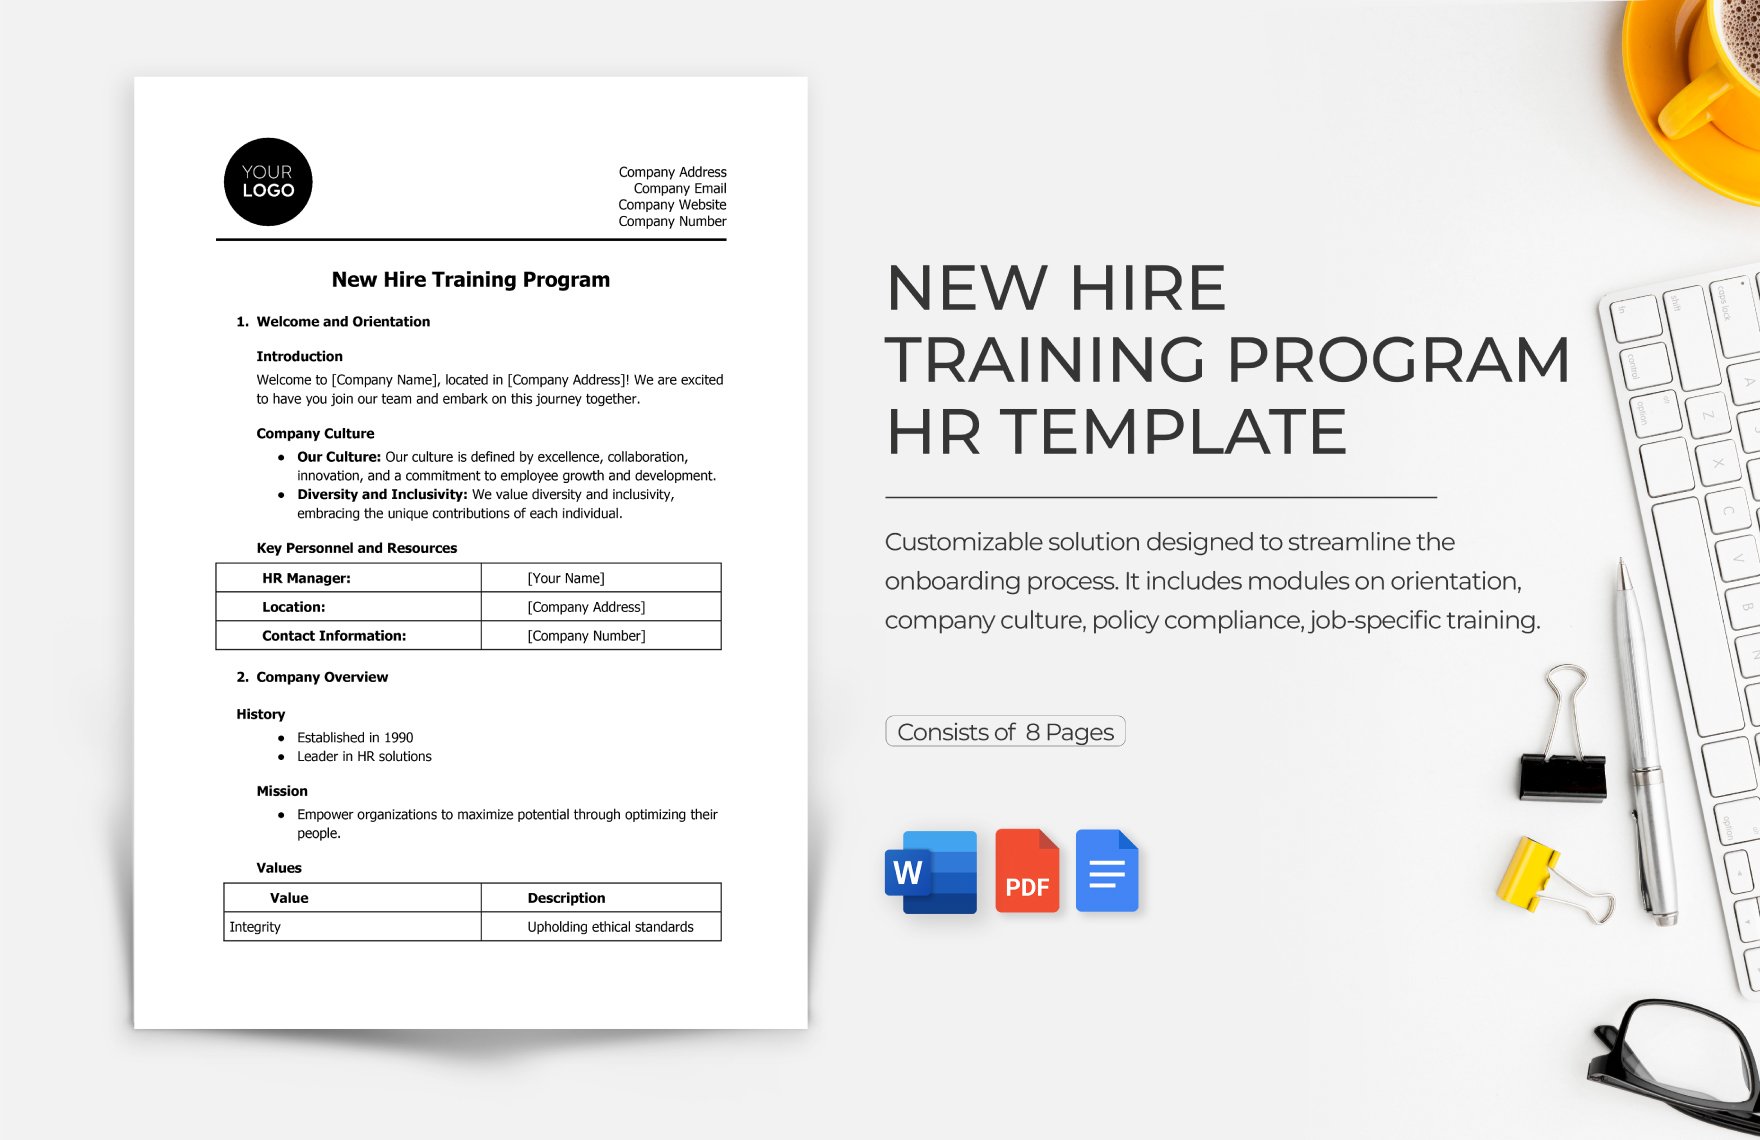  New Hire Training Program HR Template